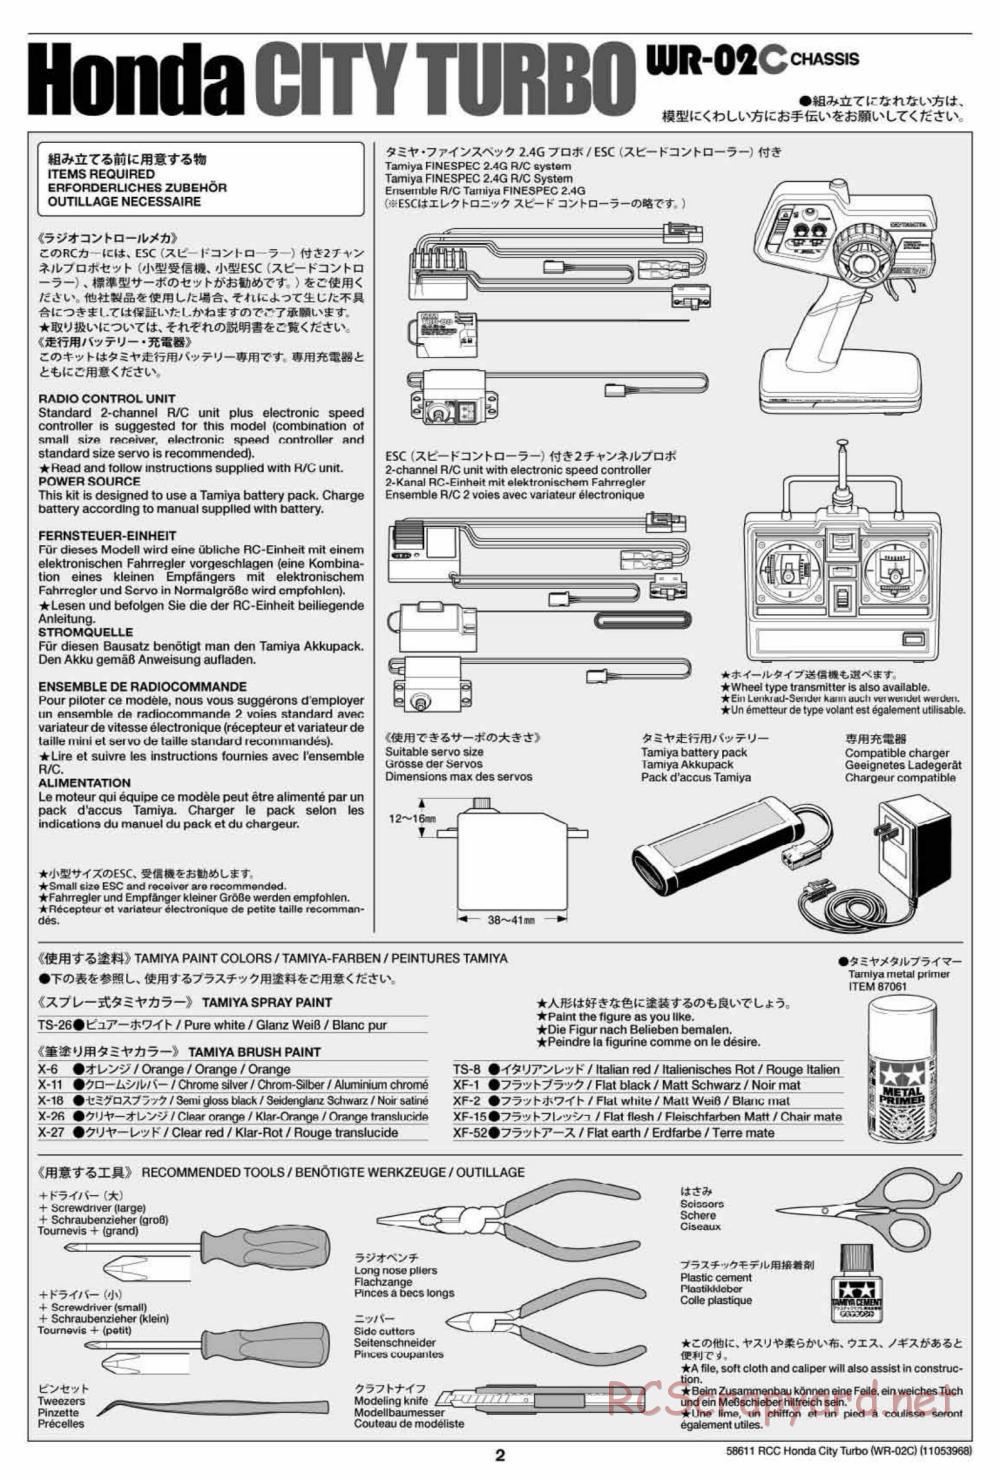 Tamiya - WR-02C Chassis - Manual - Page 2